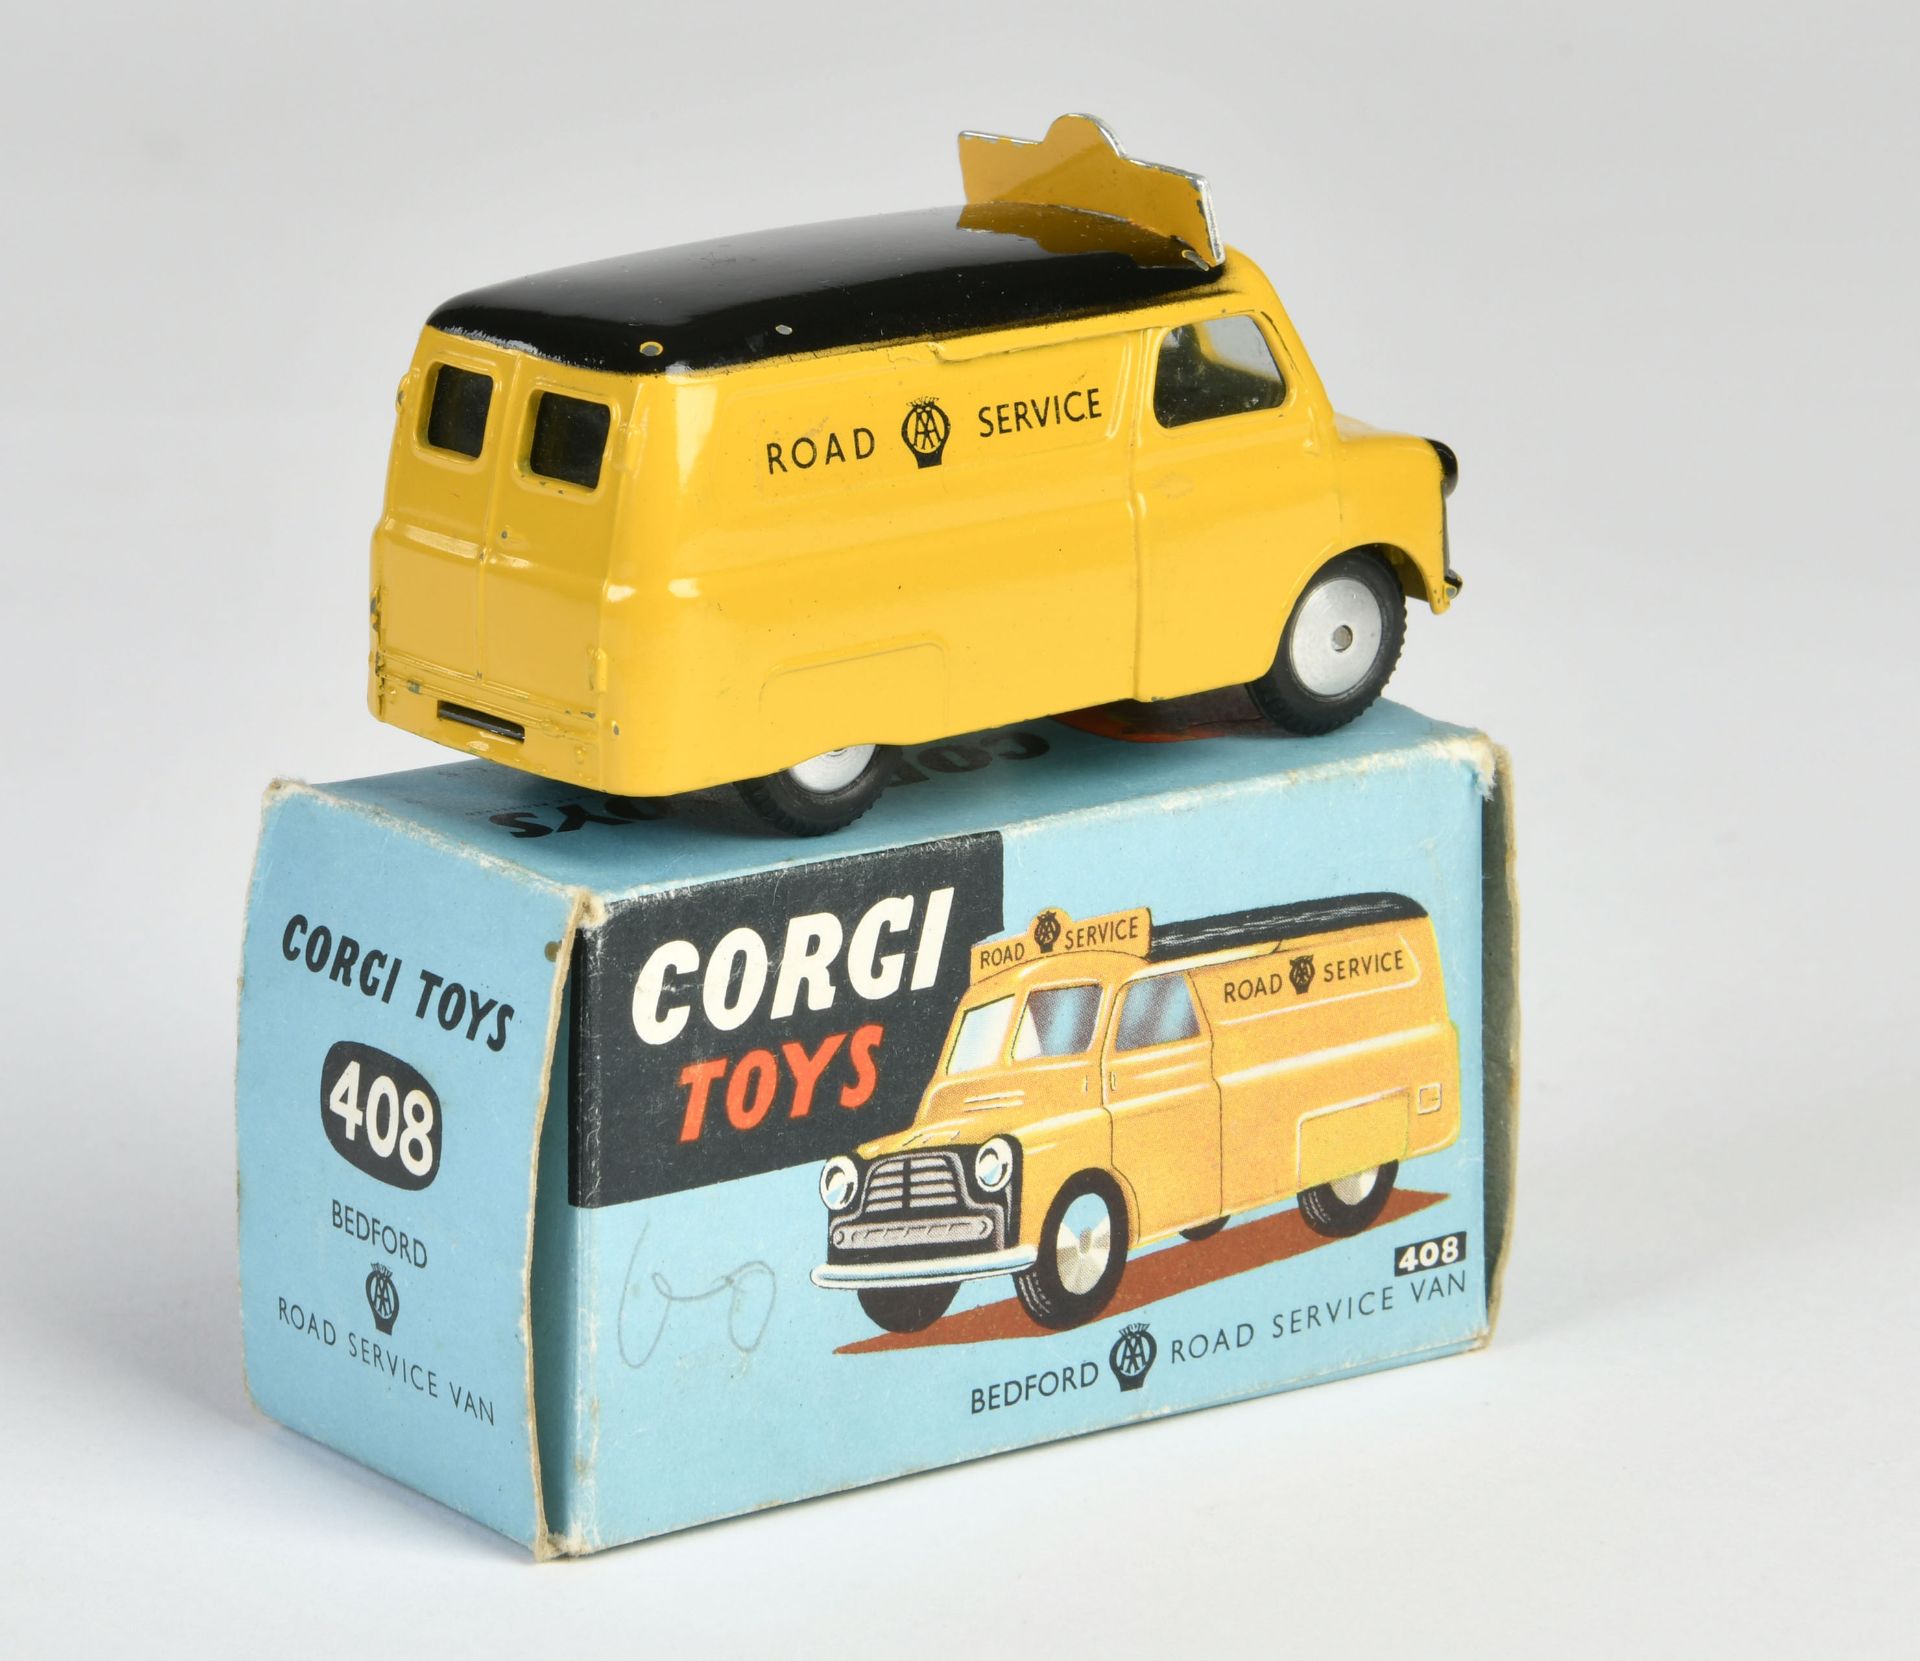 Corgi Toys, 408 Road Service Van, yellow, black, England, 1:43, diecast, box C 1, C 1 - Image 2 of 2